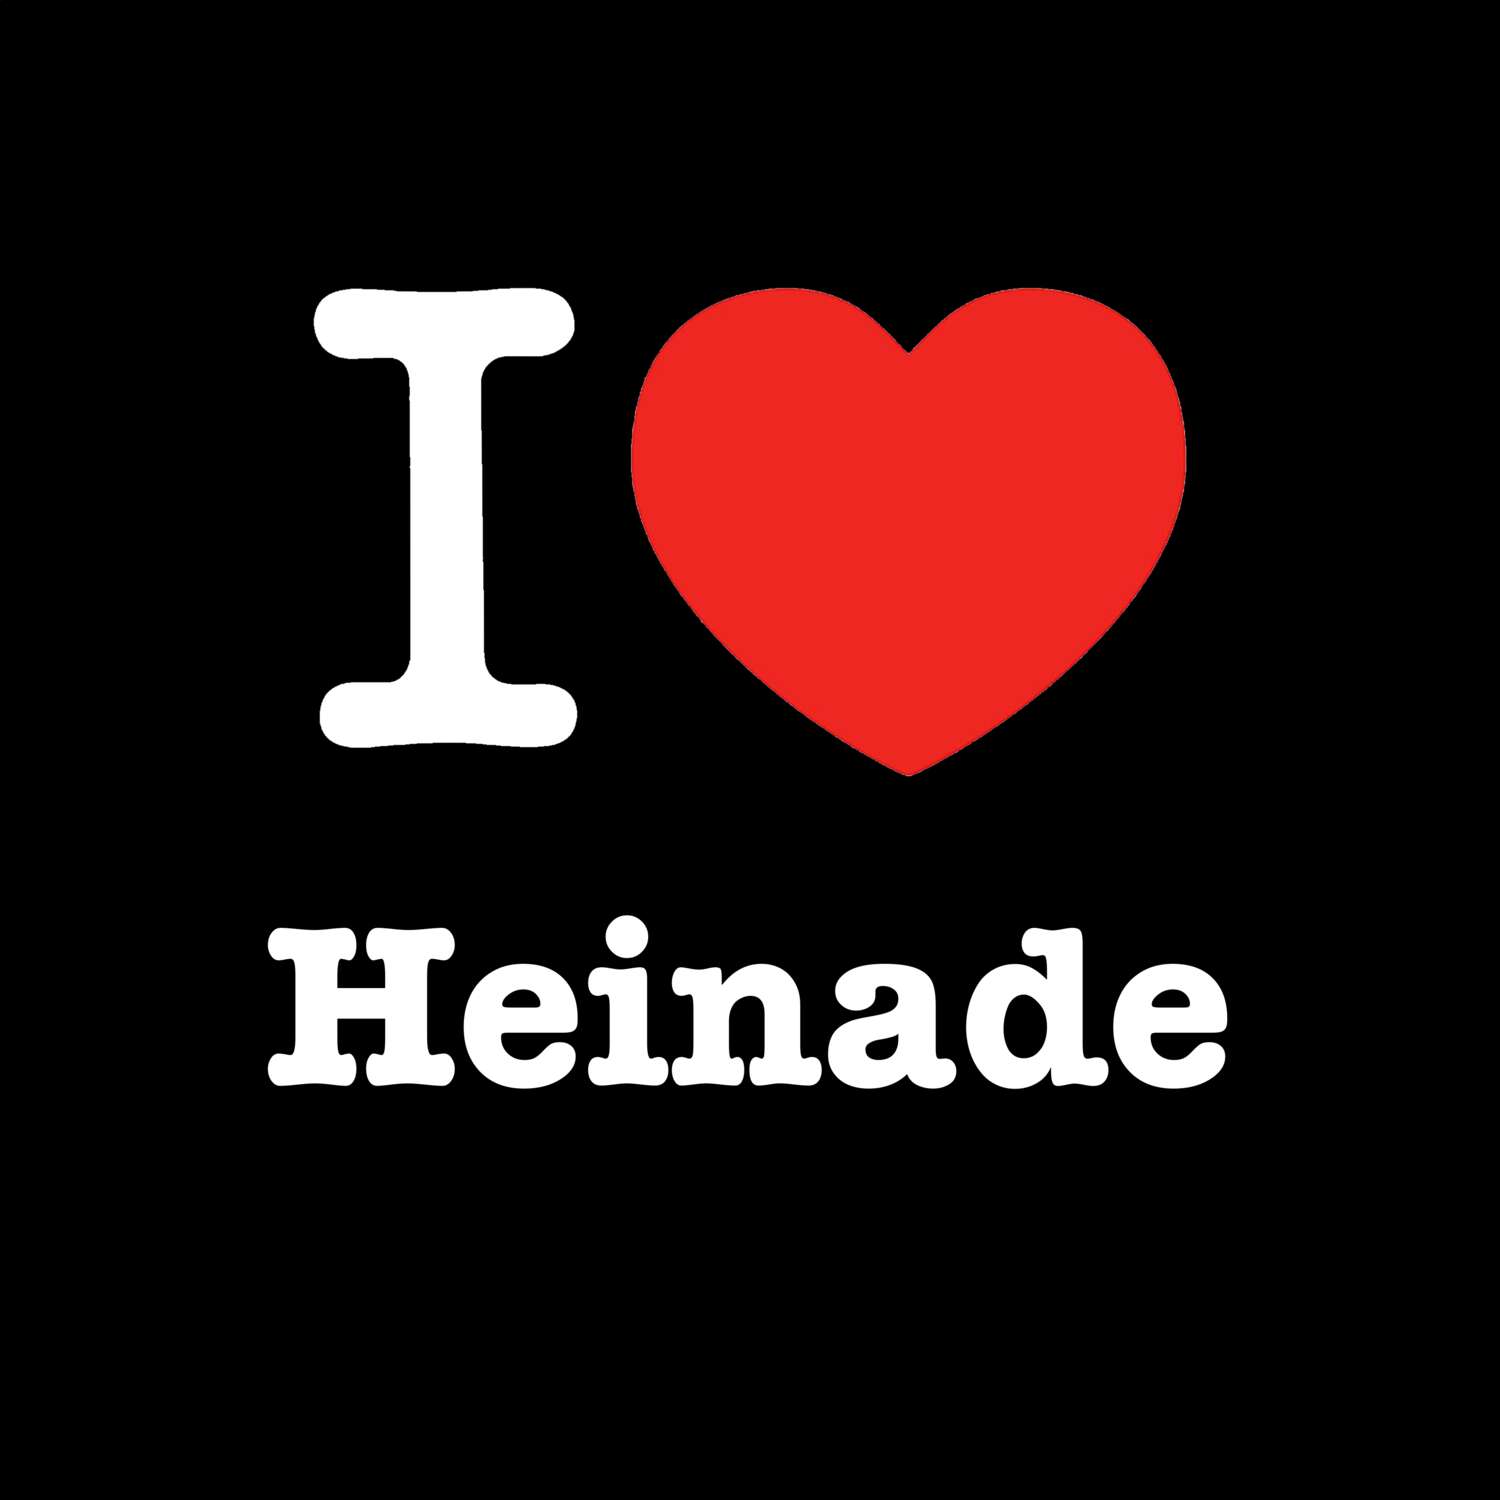 Heinade T-Shirt »I love«